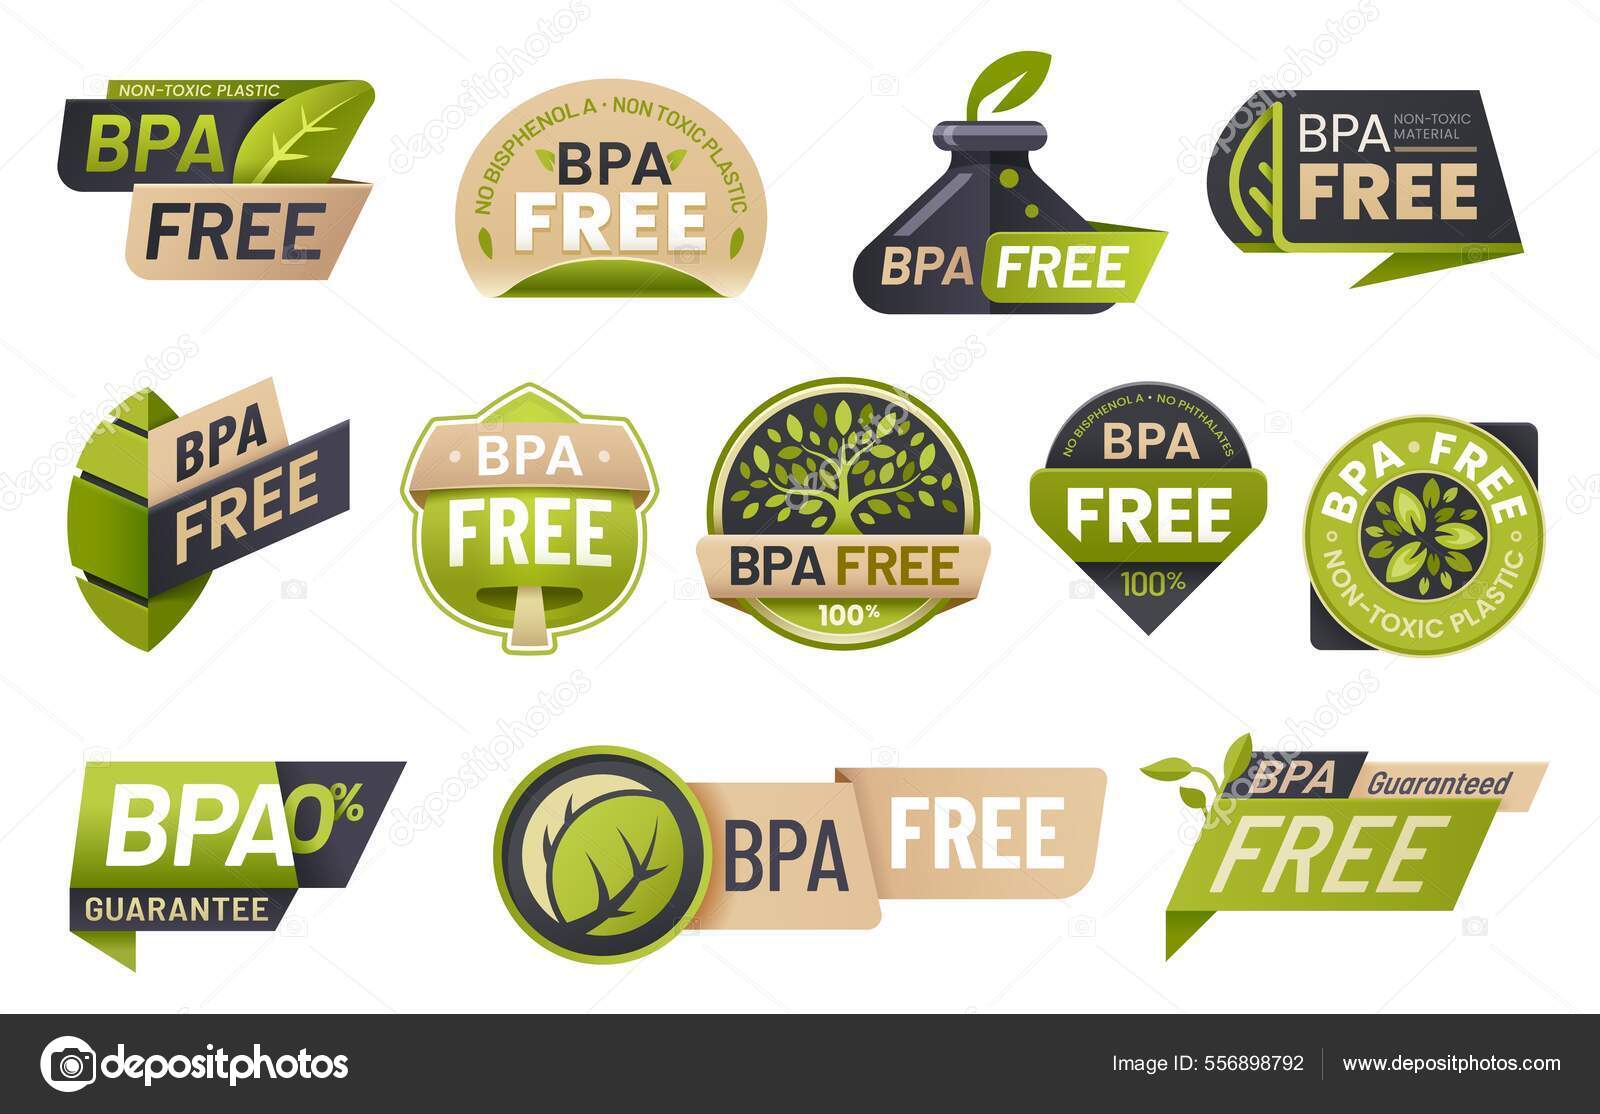 https://st.depositphotos.com/1020070/55689/v/1600/depositphotos_556898792-stock-illustration-bpa-free-icons-labels-food.jpg